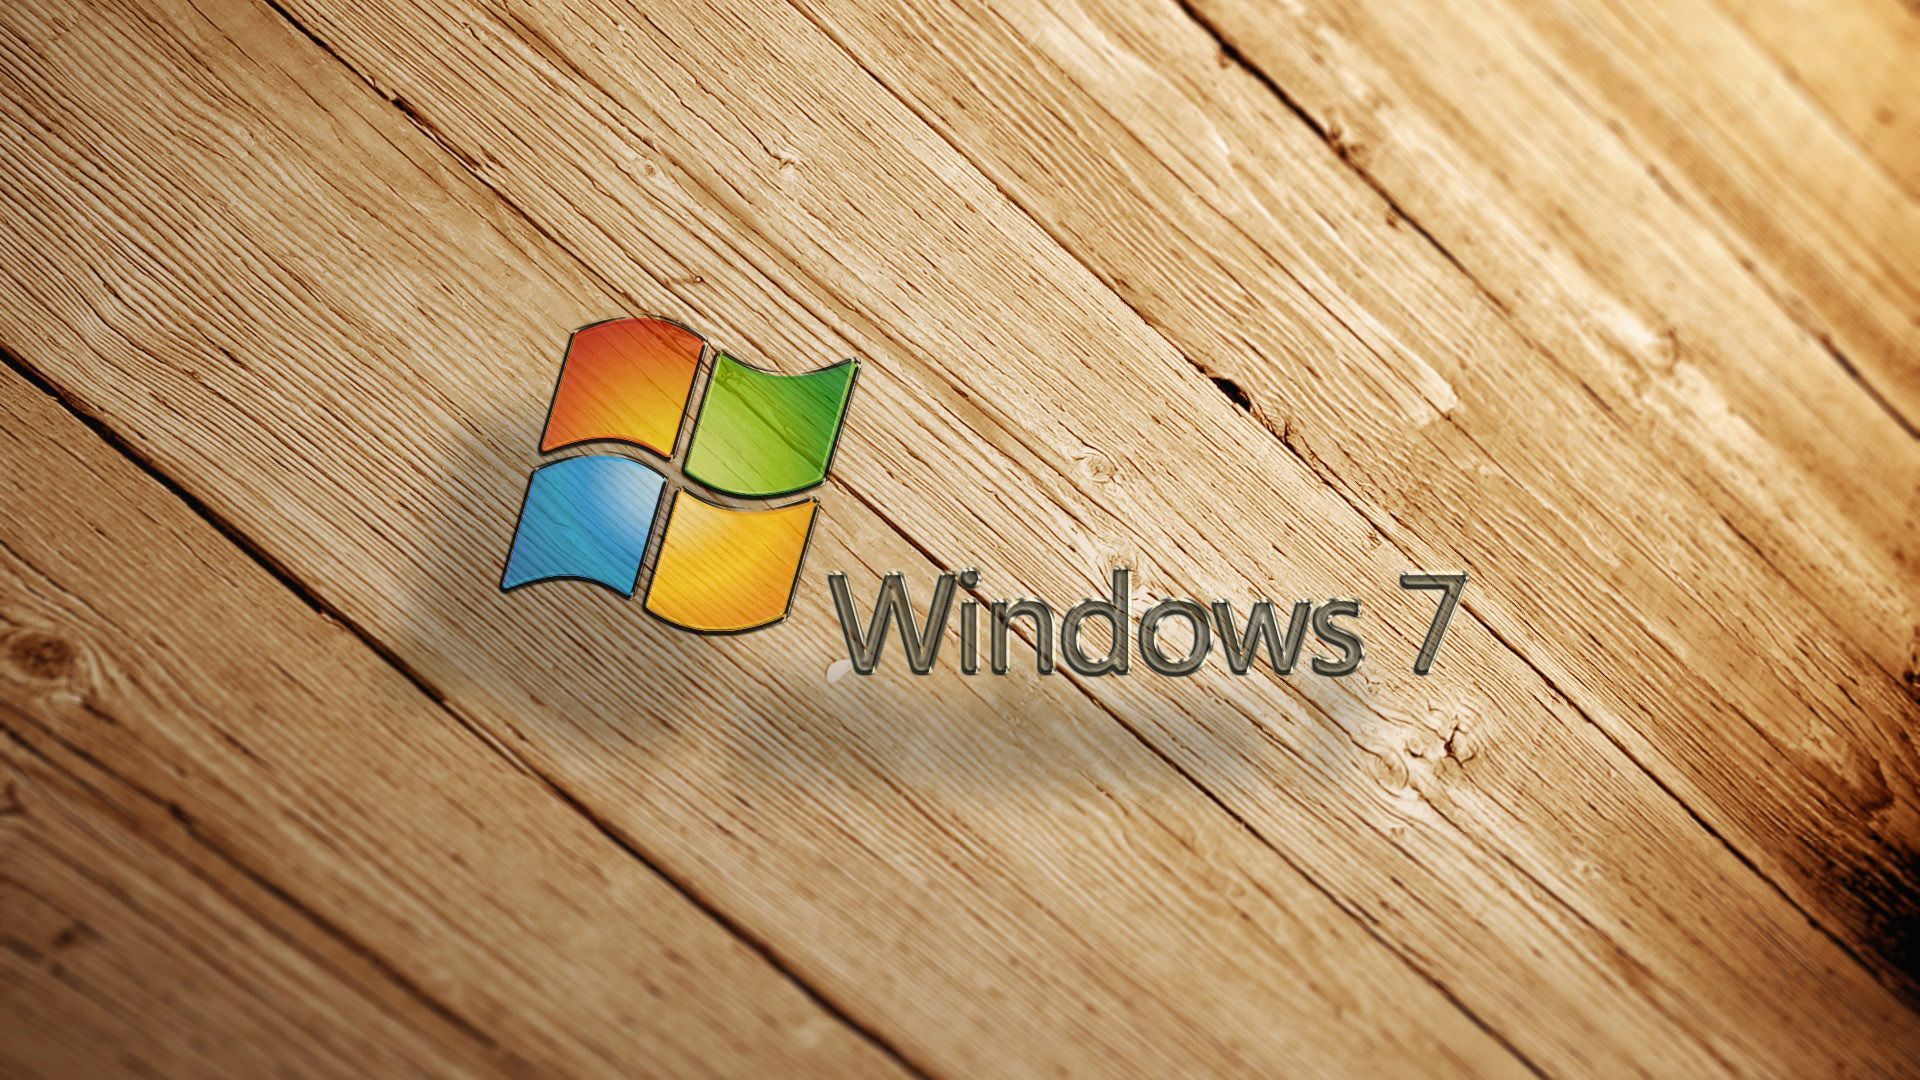 Windows 7 logo on the wood Wallpaper 26032